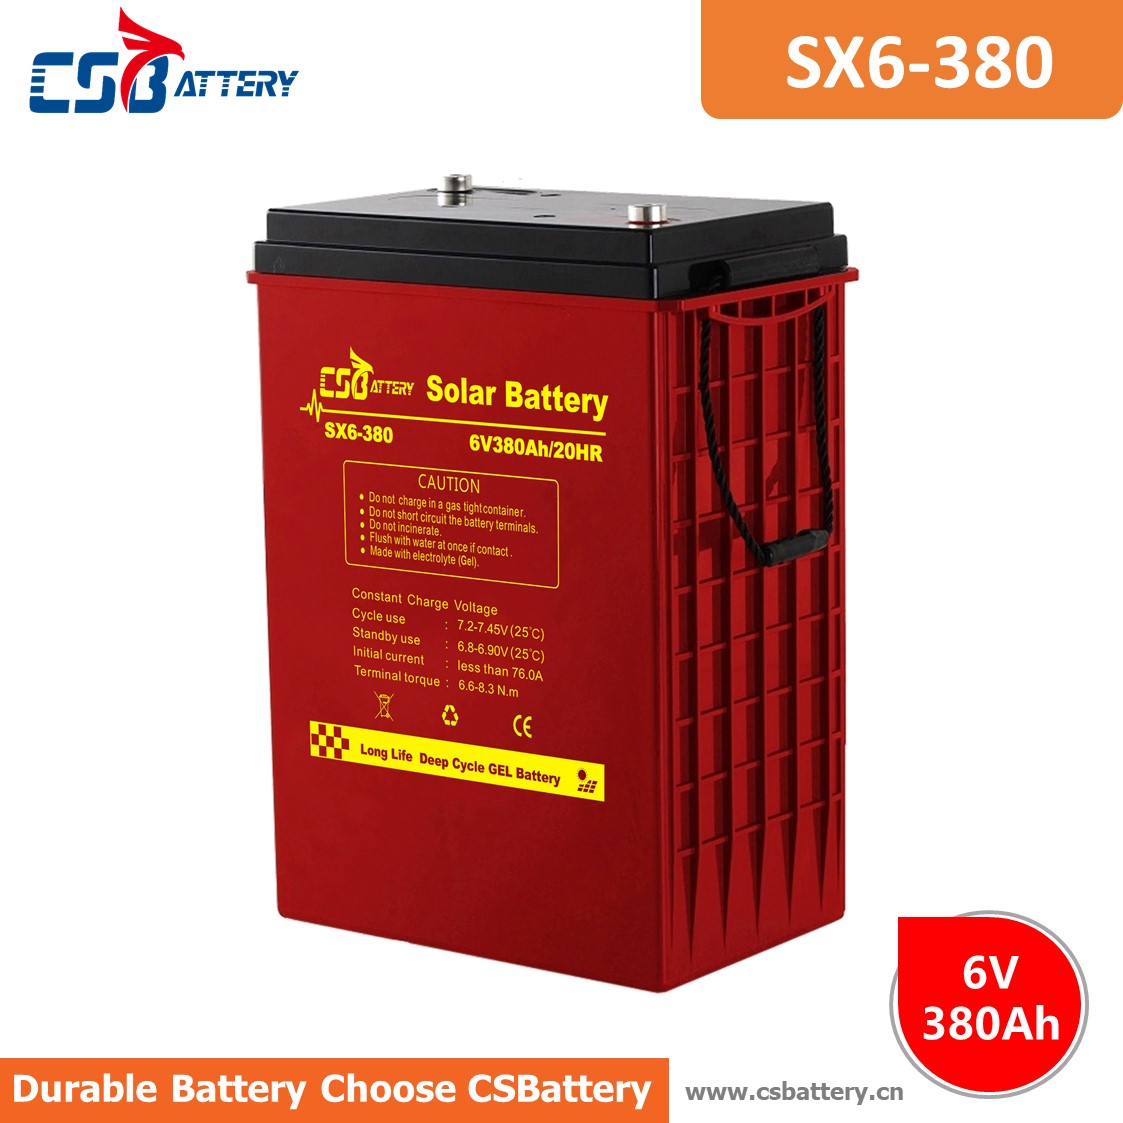 Batteria GEL a ciclo profondo SX6-380 6V 380Ah
